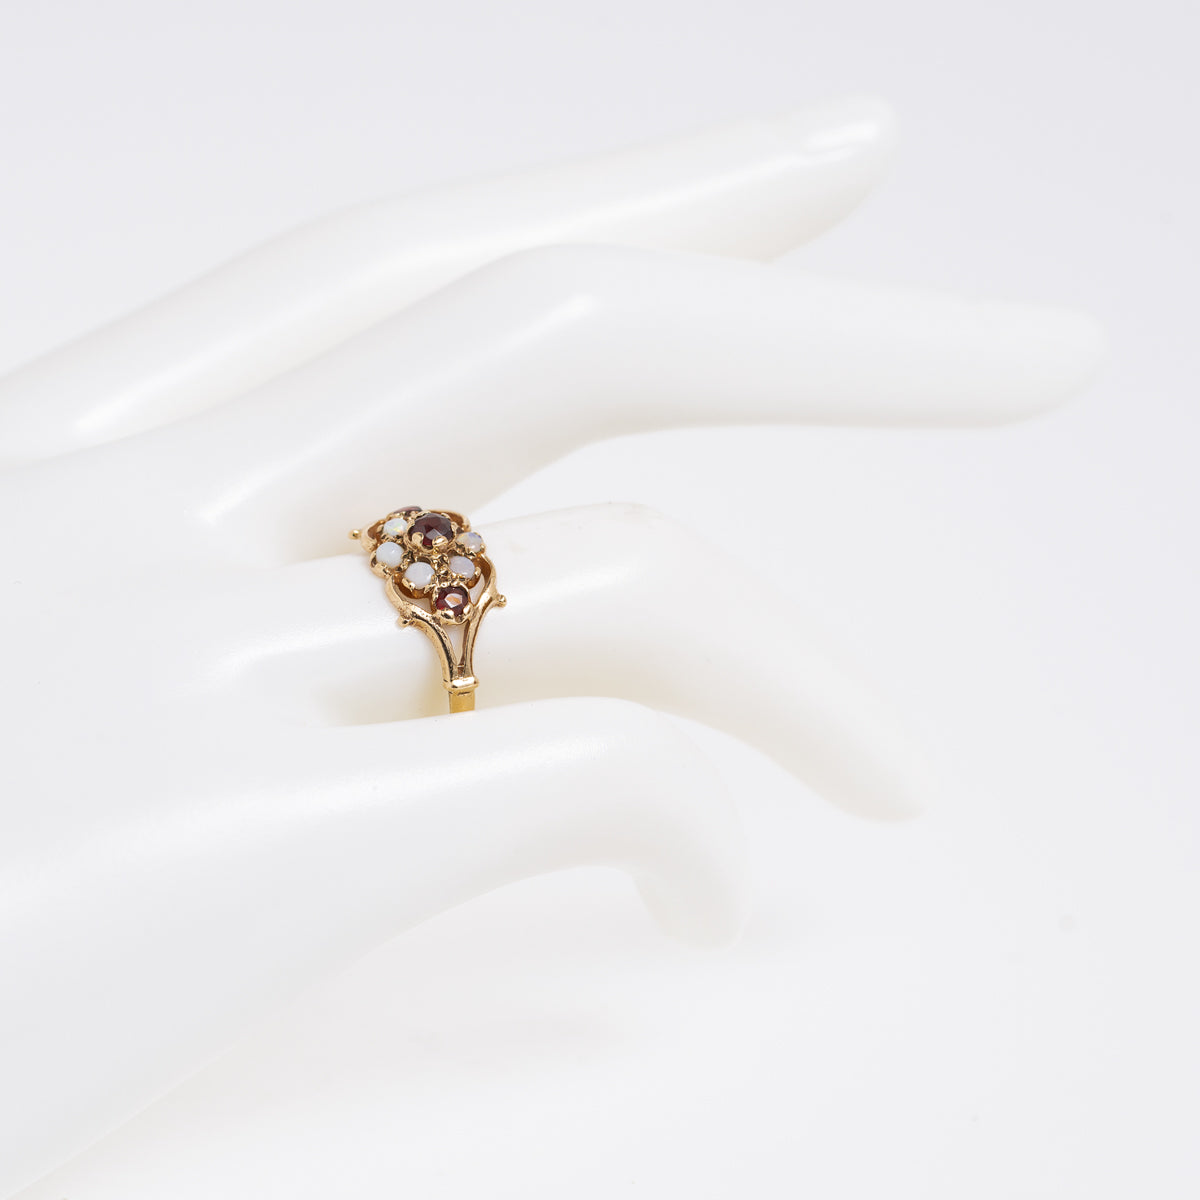 Vintage Retro 1980's 9ct Gold Garnet & Opal Flower Design Ring Ladies Size P  (A1151)